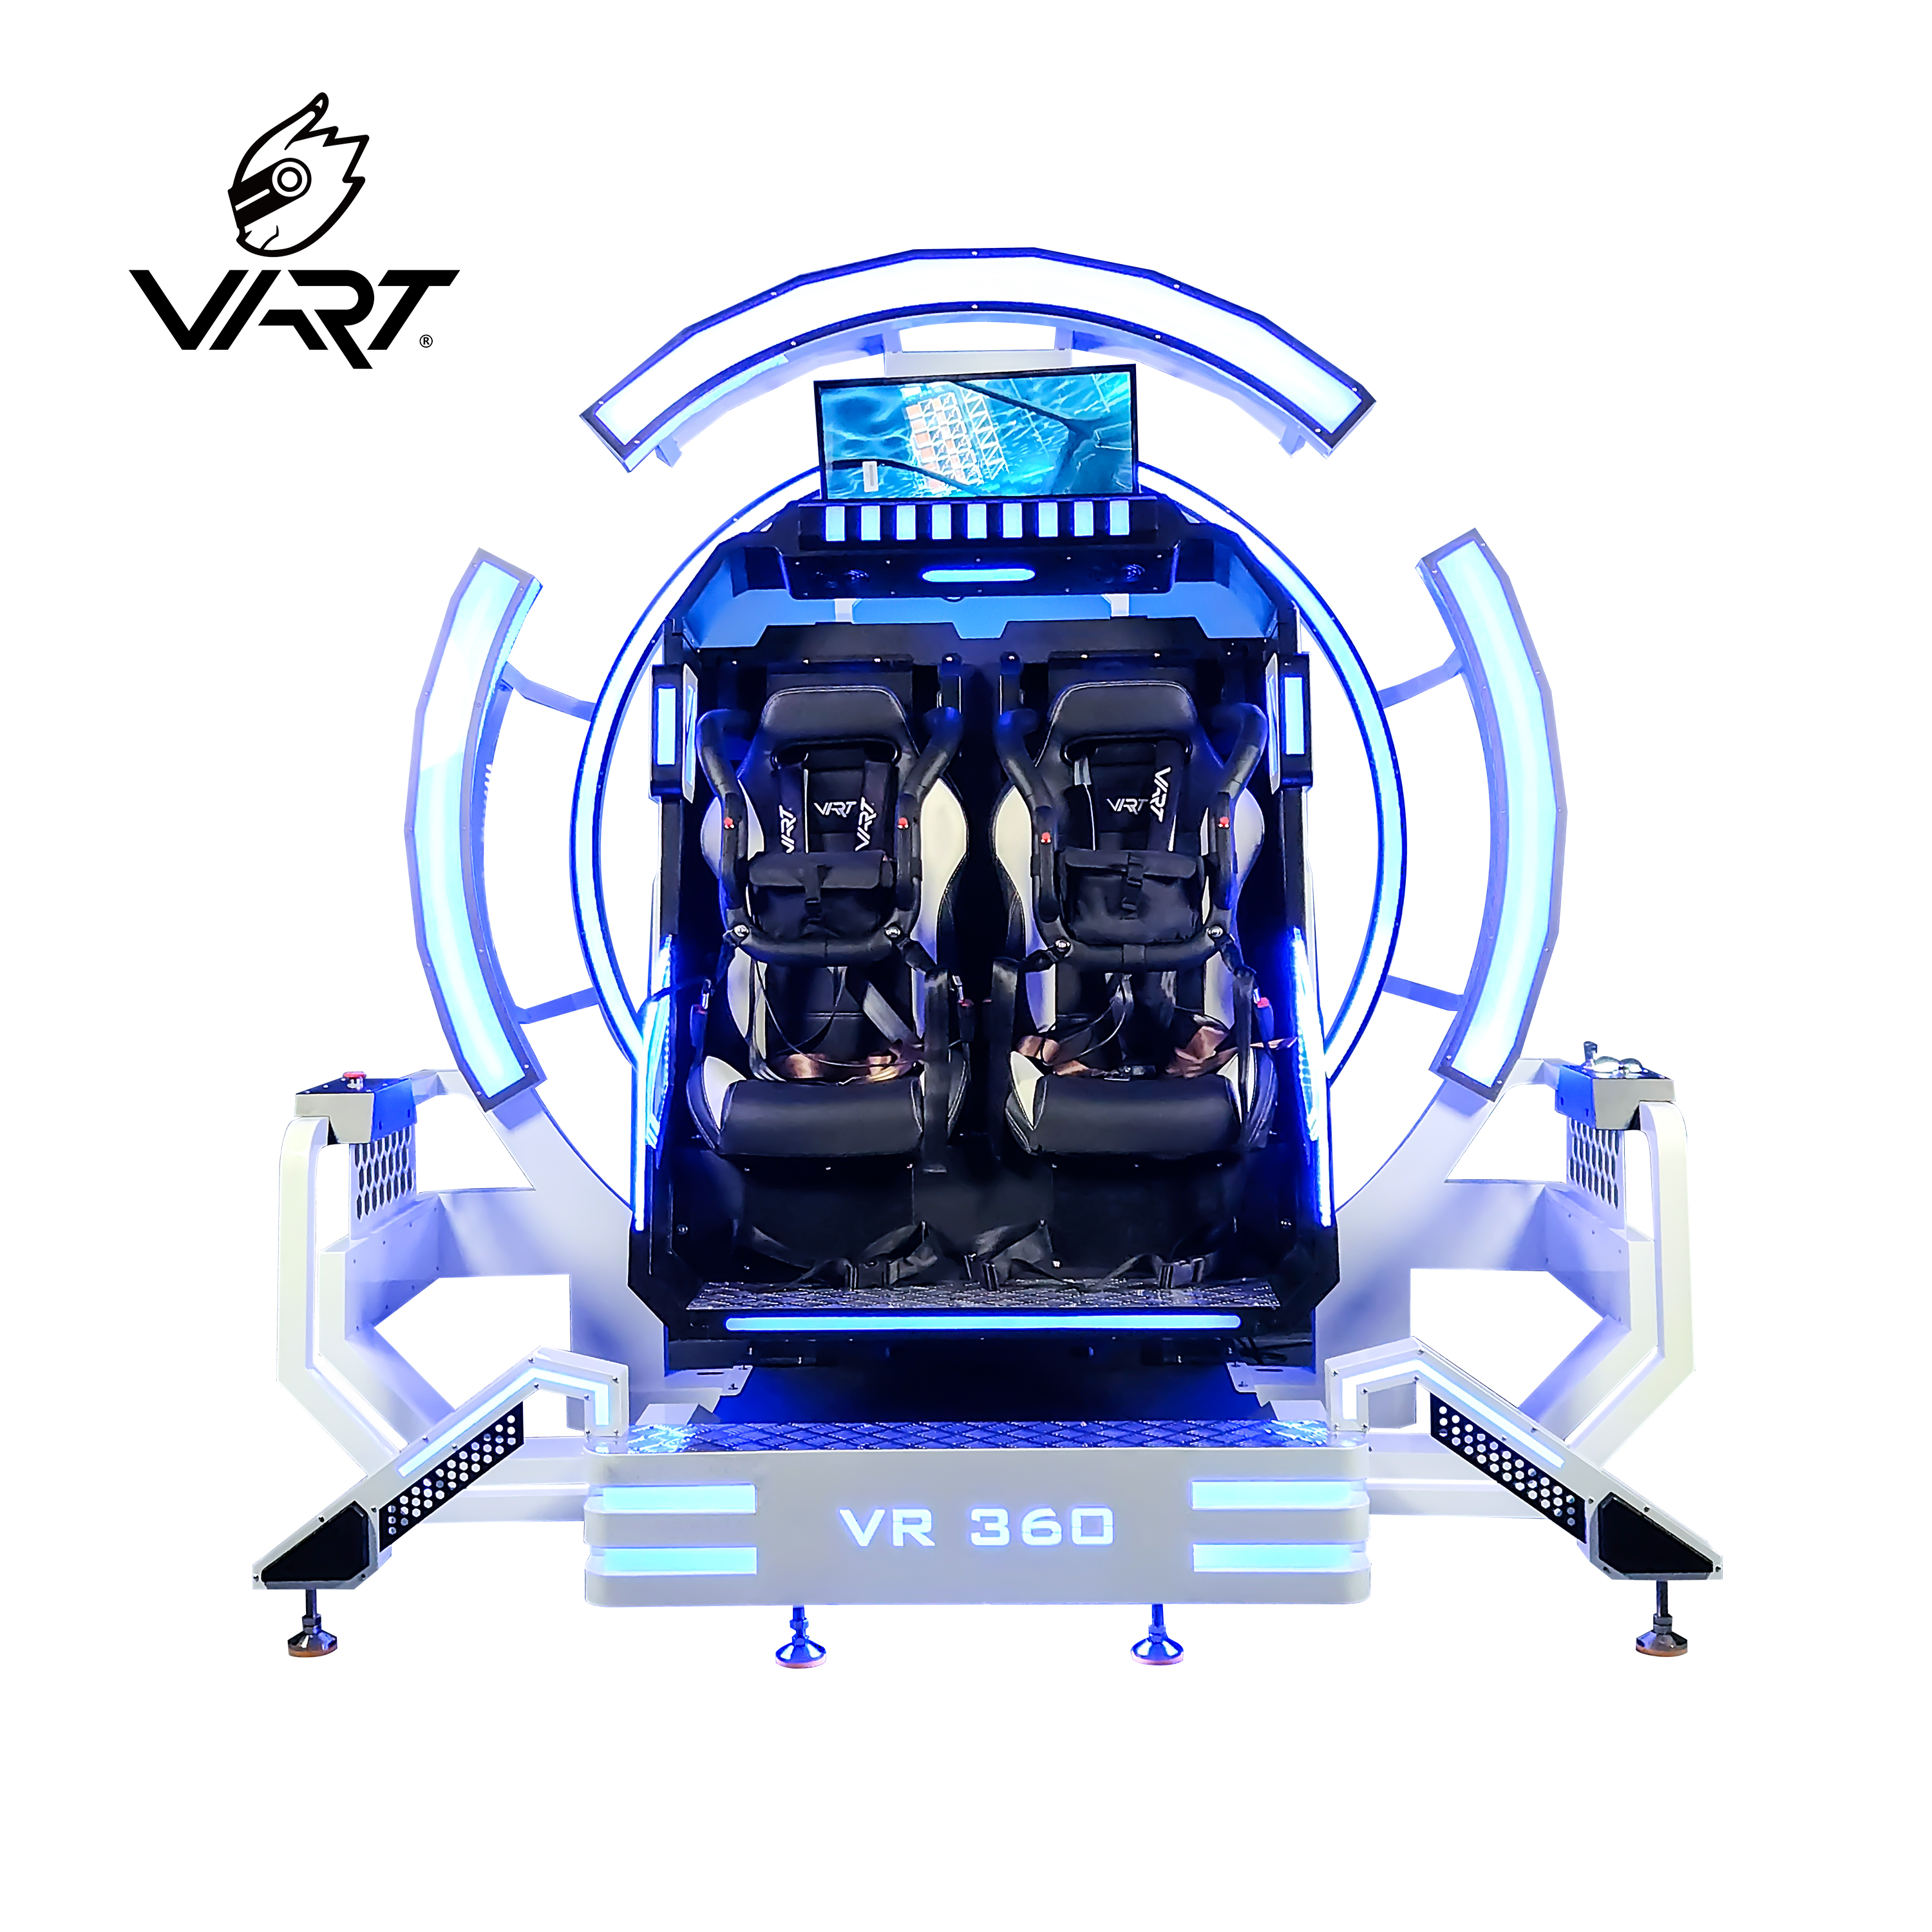 9d Vr 360 Degree Headtracking Roller Coaster Simulator Plus Virtual Re vera Vibration 9d Cinema